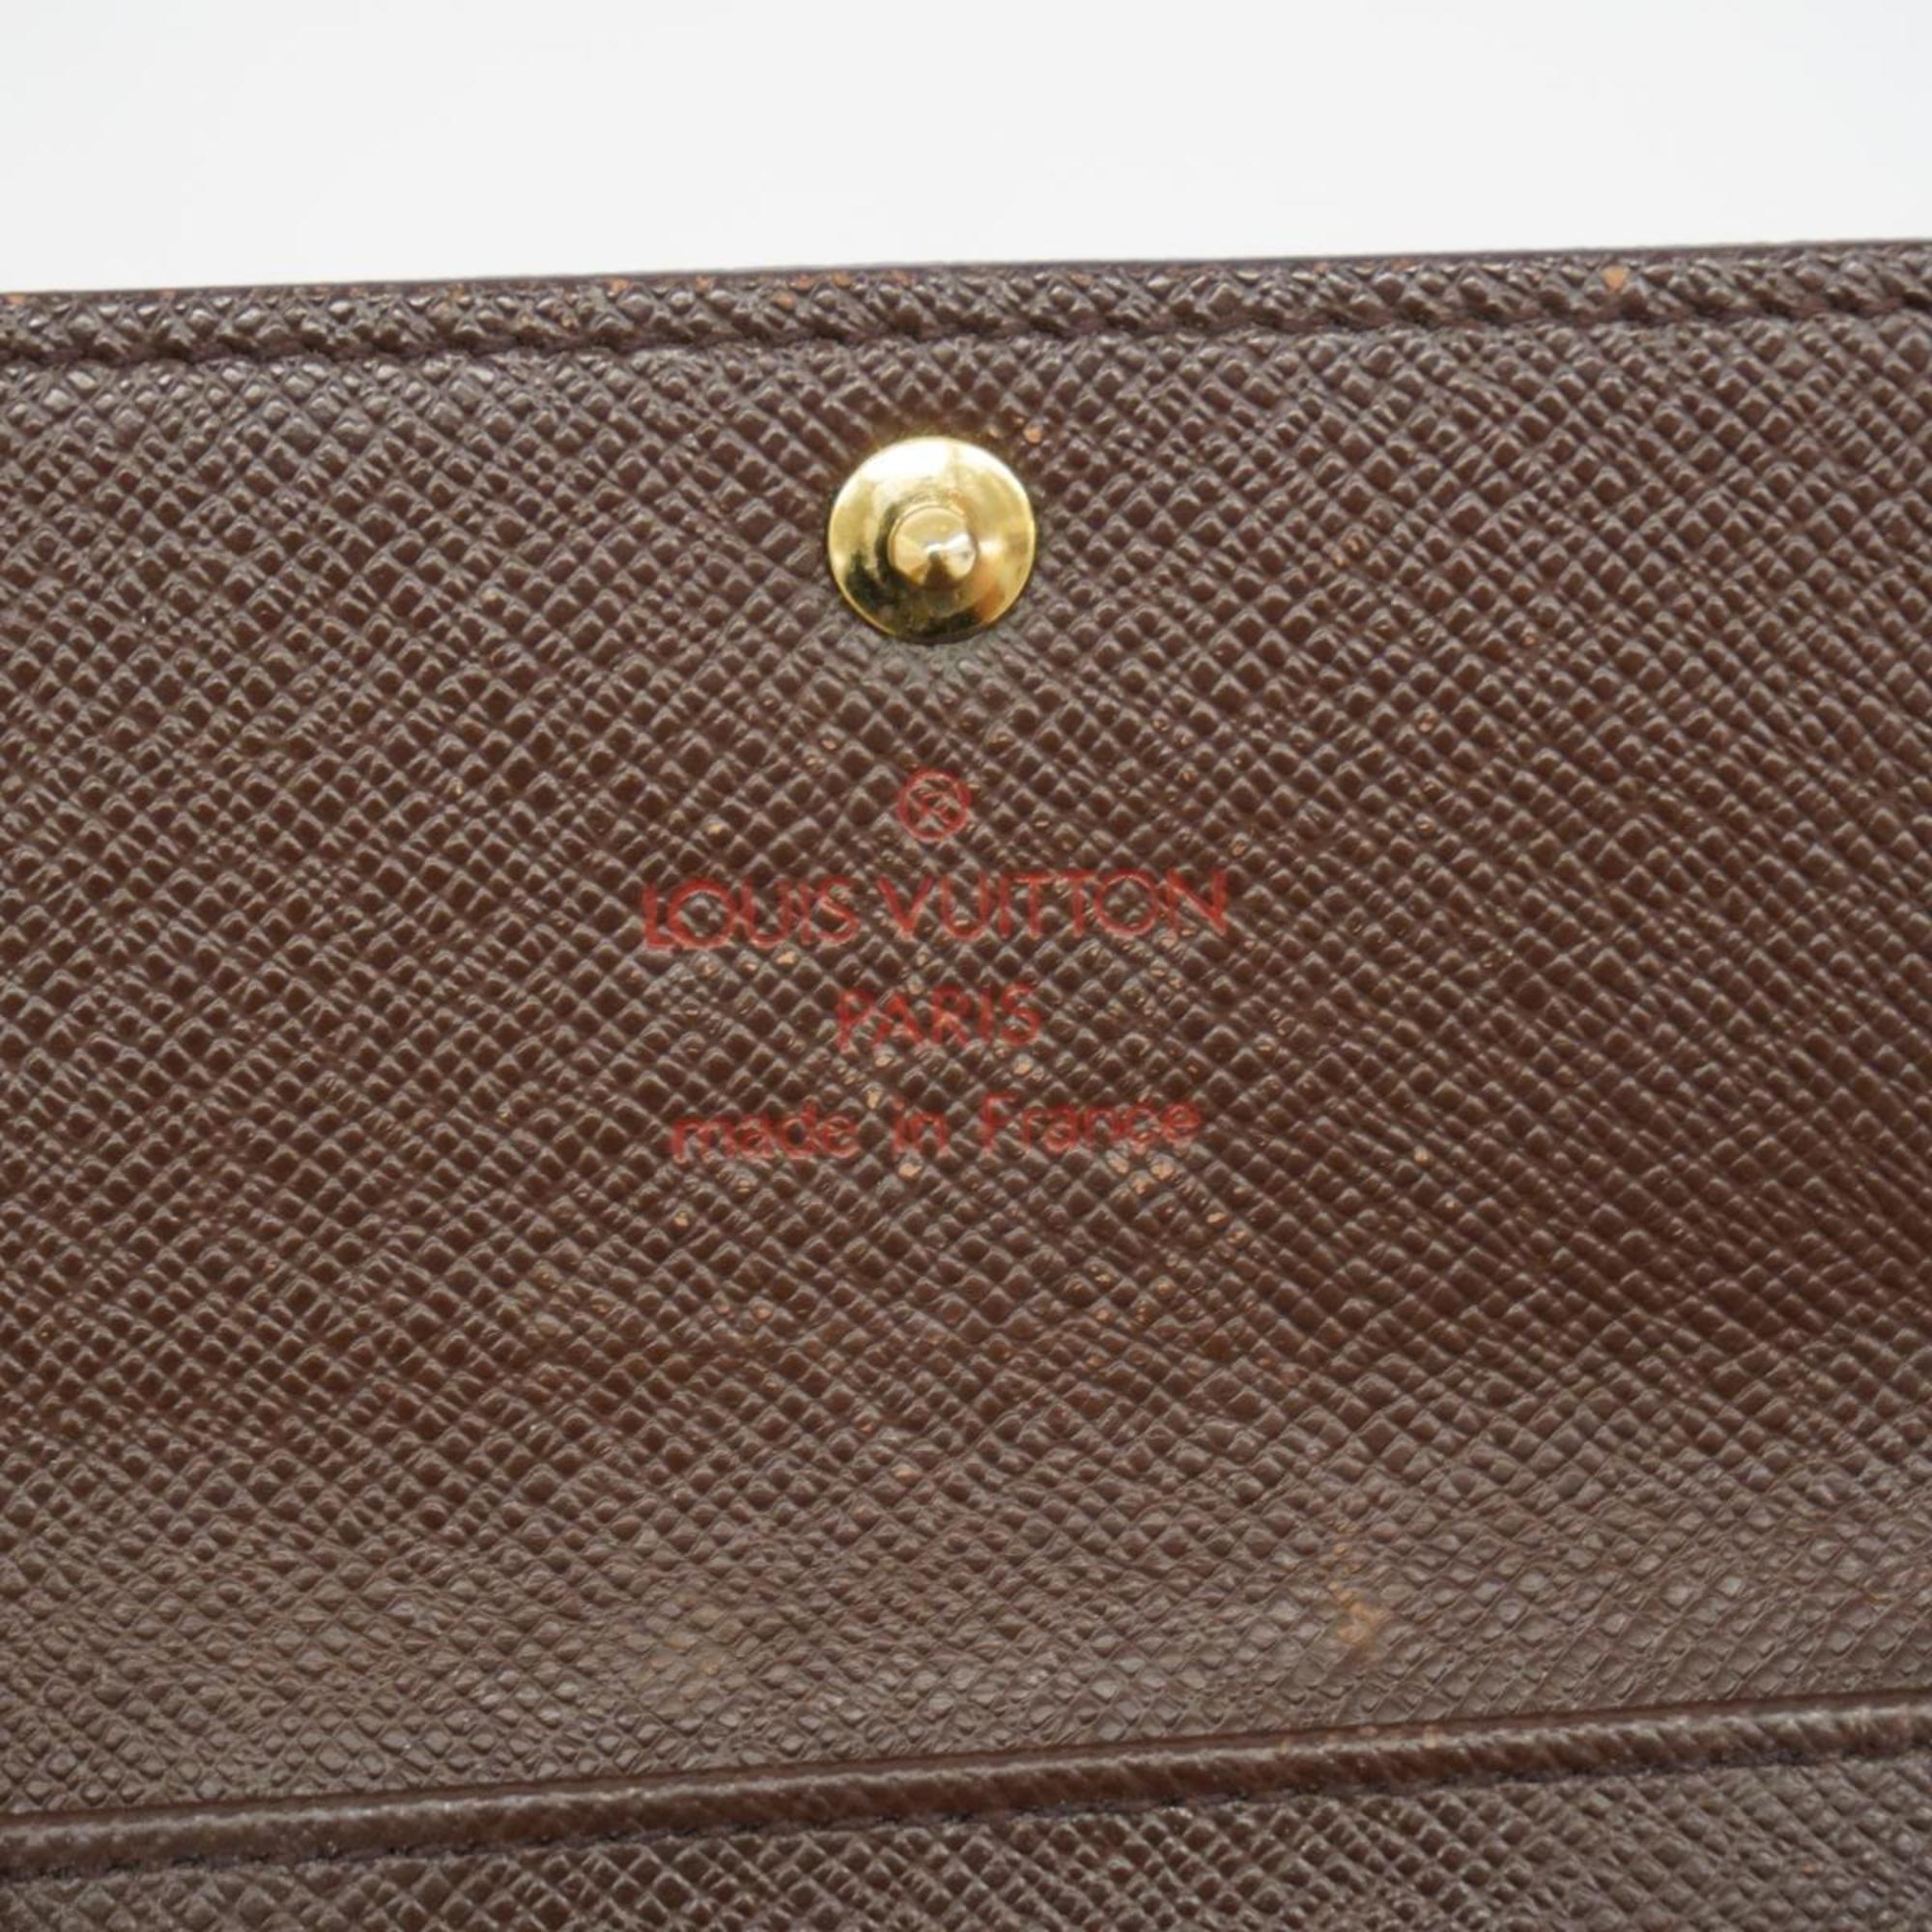 Louis Vuitton Key Case Damier Multicle 4 N62631 Ebene Men's Women's